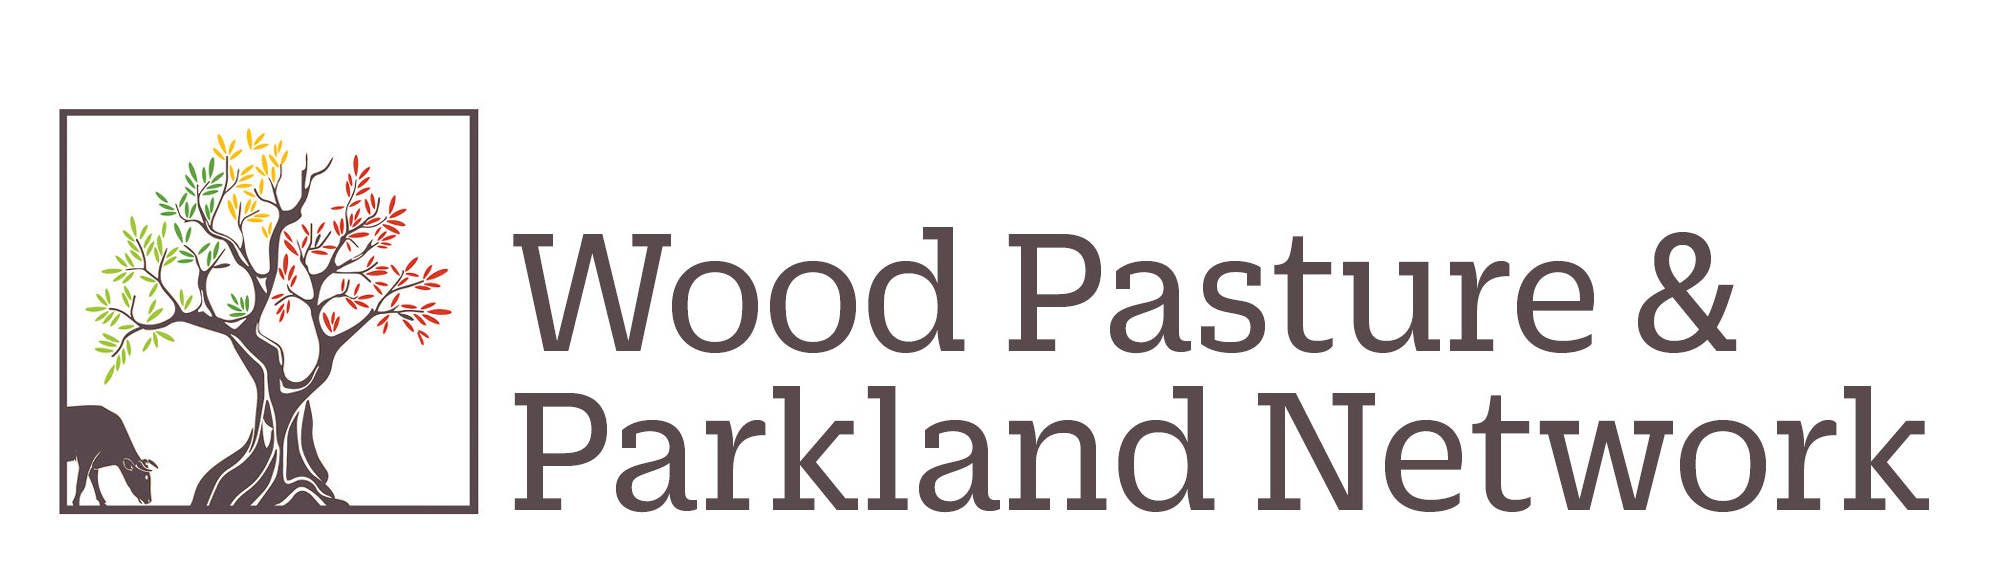 Wood Pasture & Parkland Network